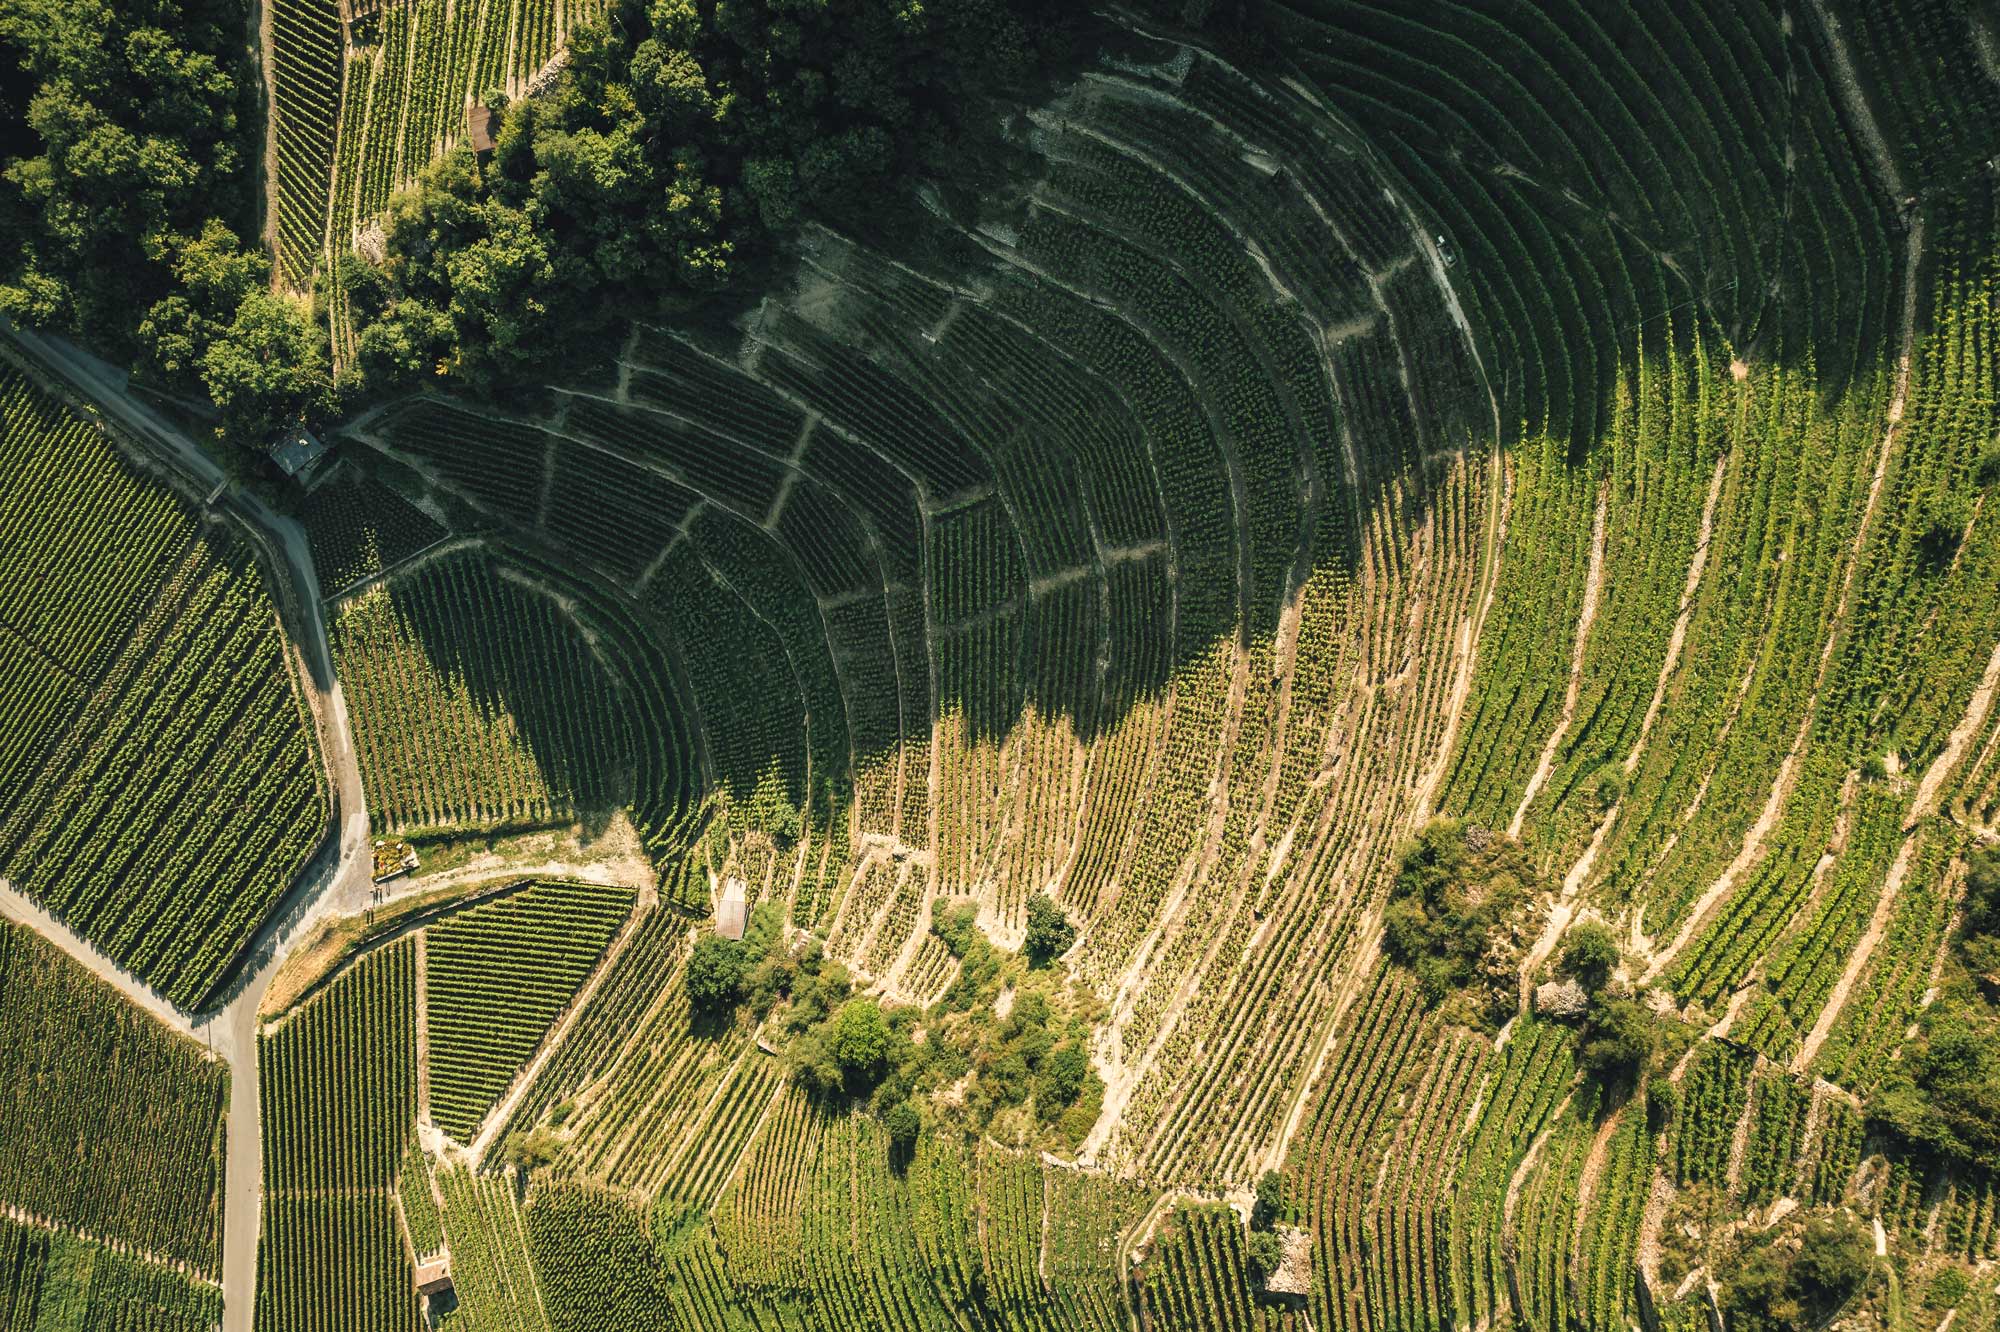 The vineyard terraces of Fully, Valais, Switzerland